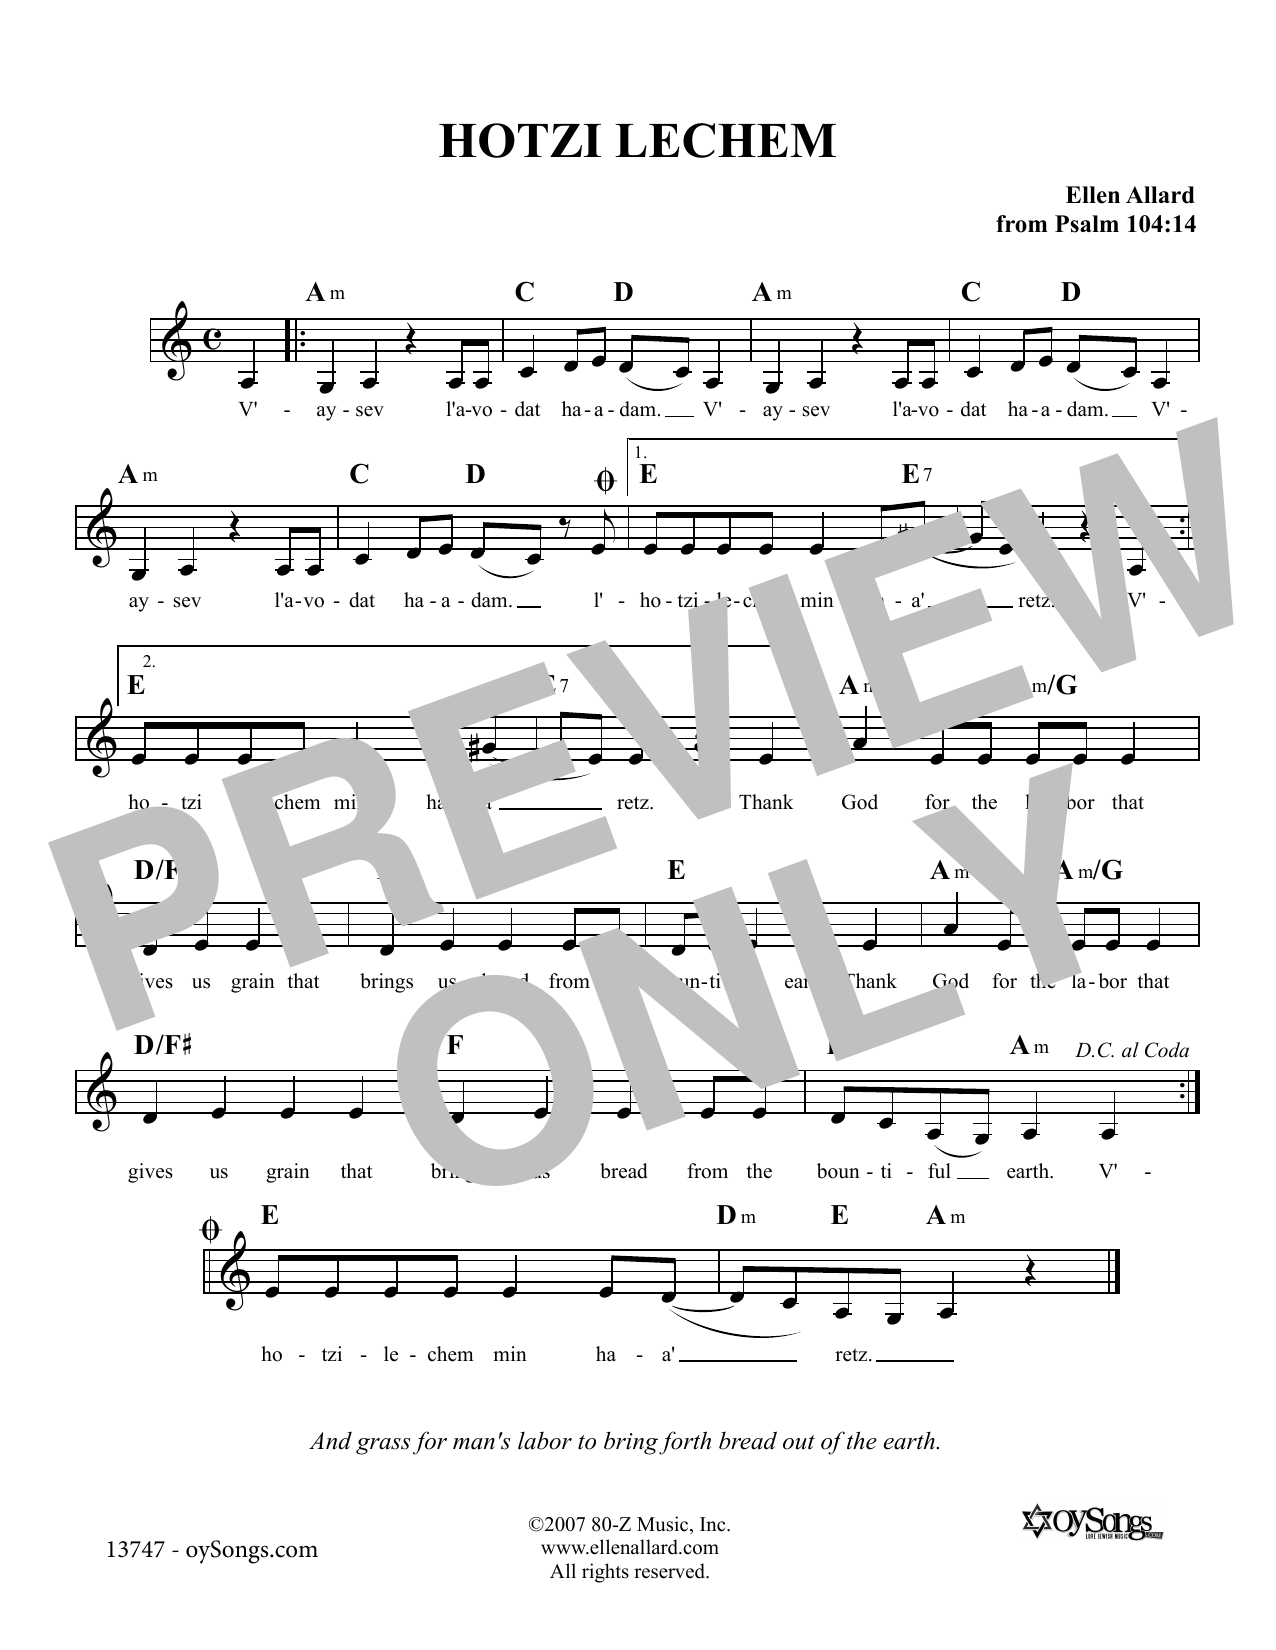 Ellen Allard Hotzi Lechem sheet music notes and chords arranged for Lead Sheet / Fake Book